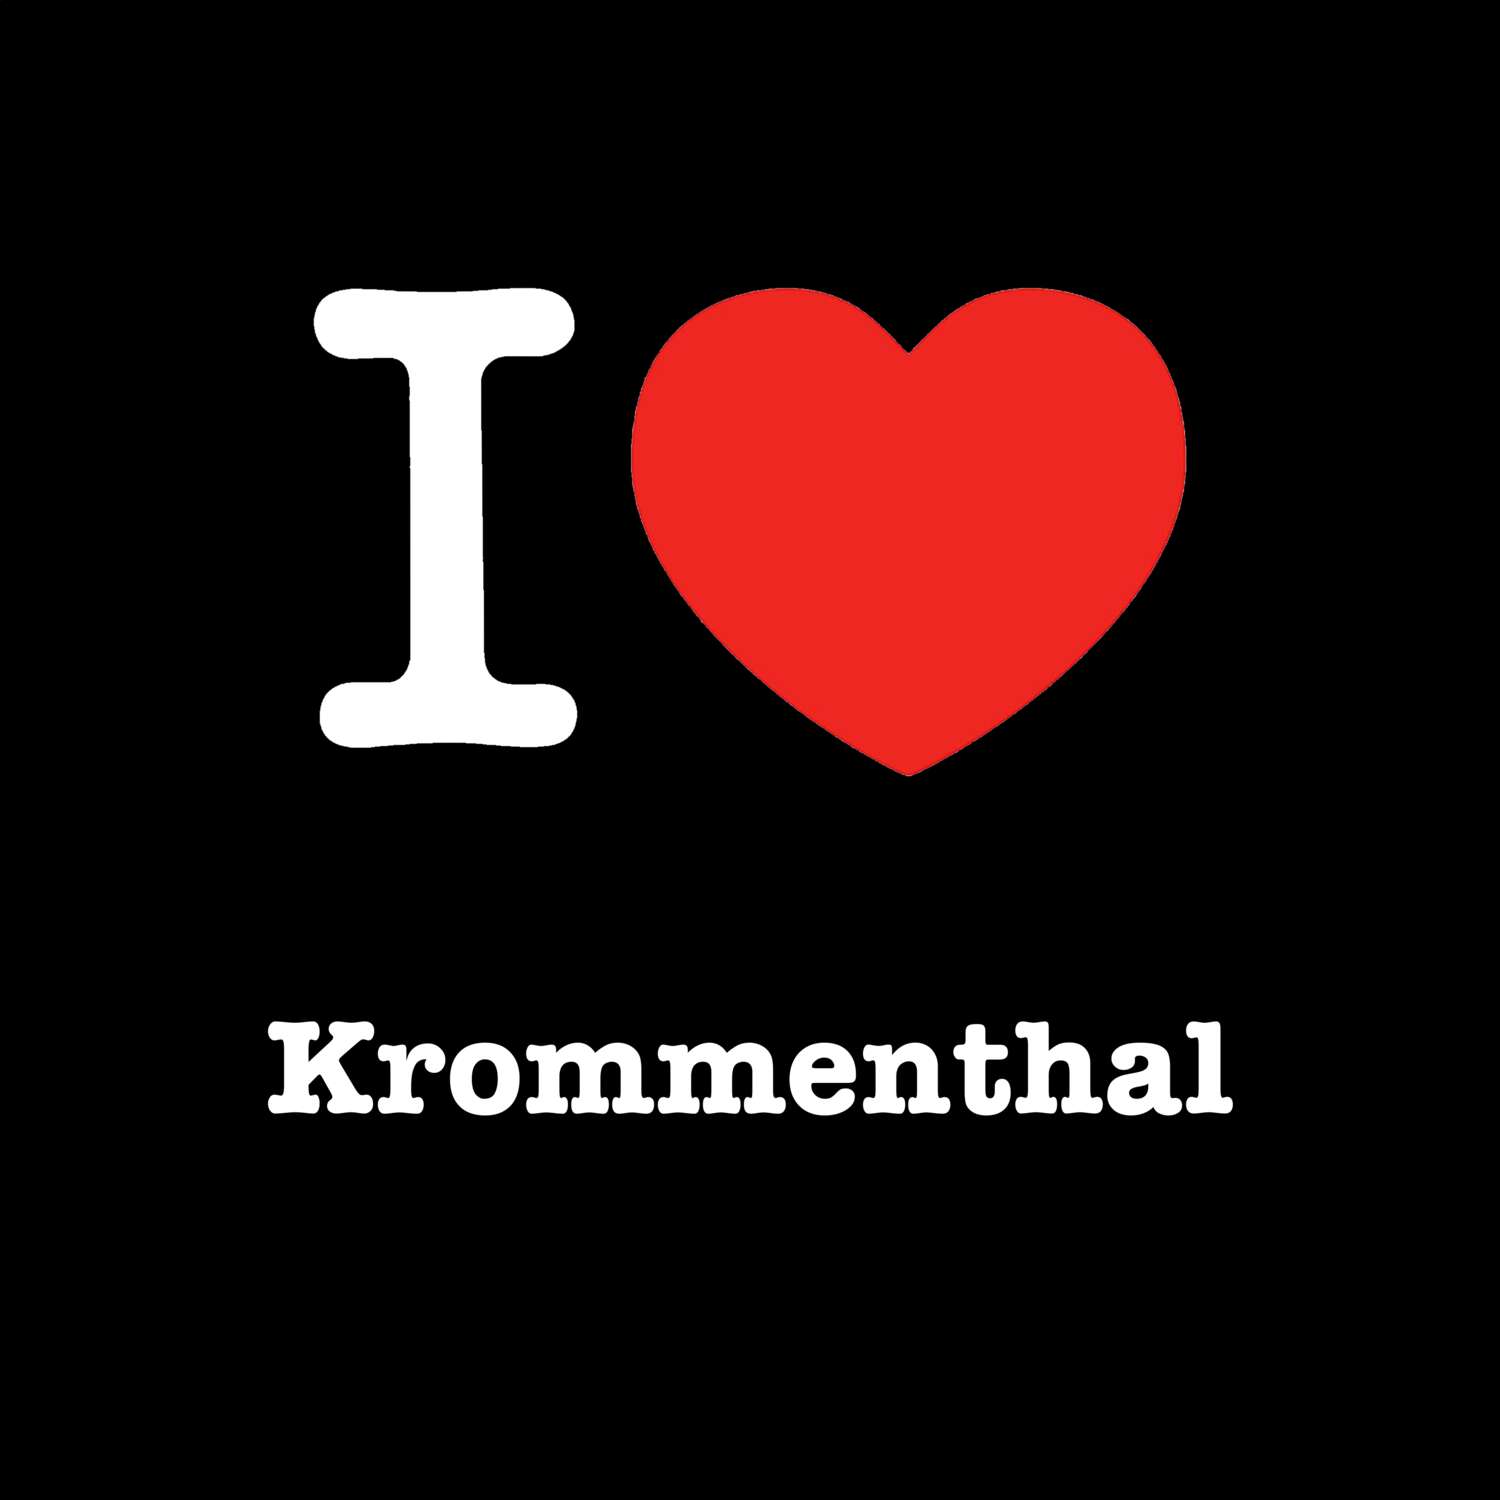 Krommenthal T-Shirt »I love«